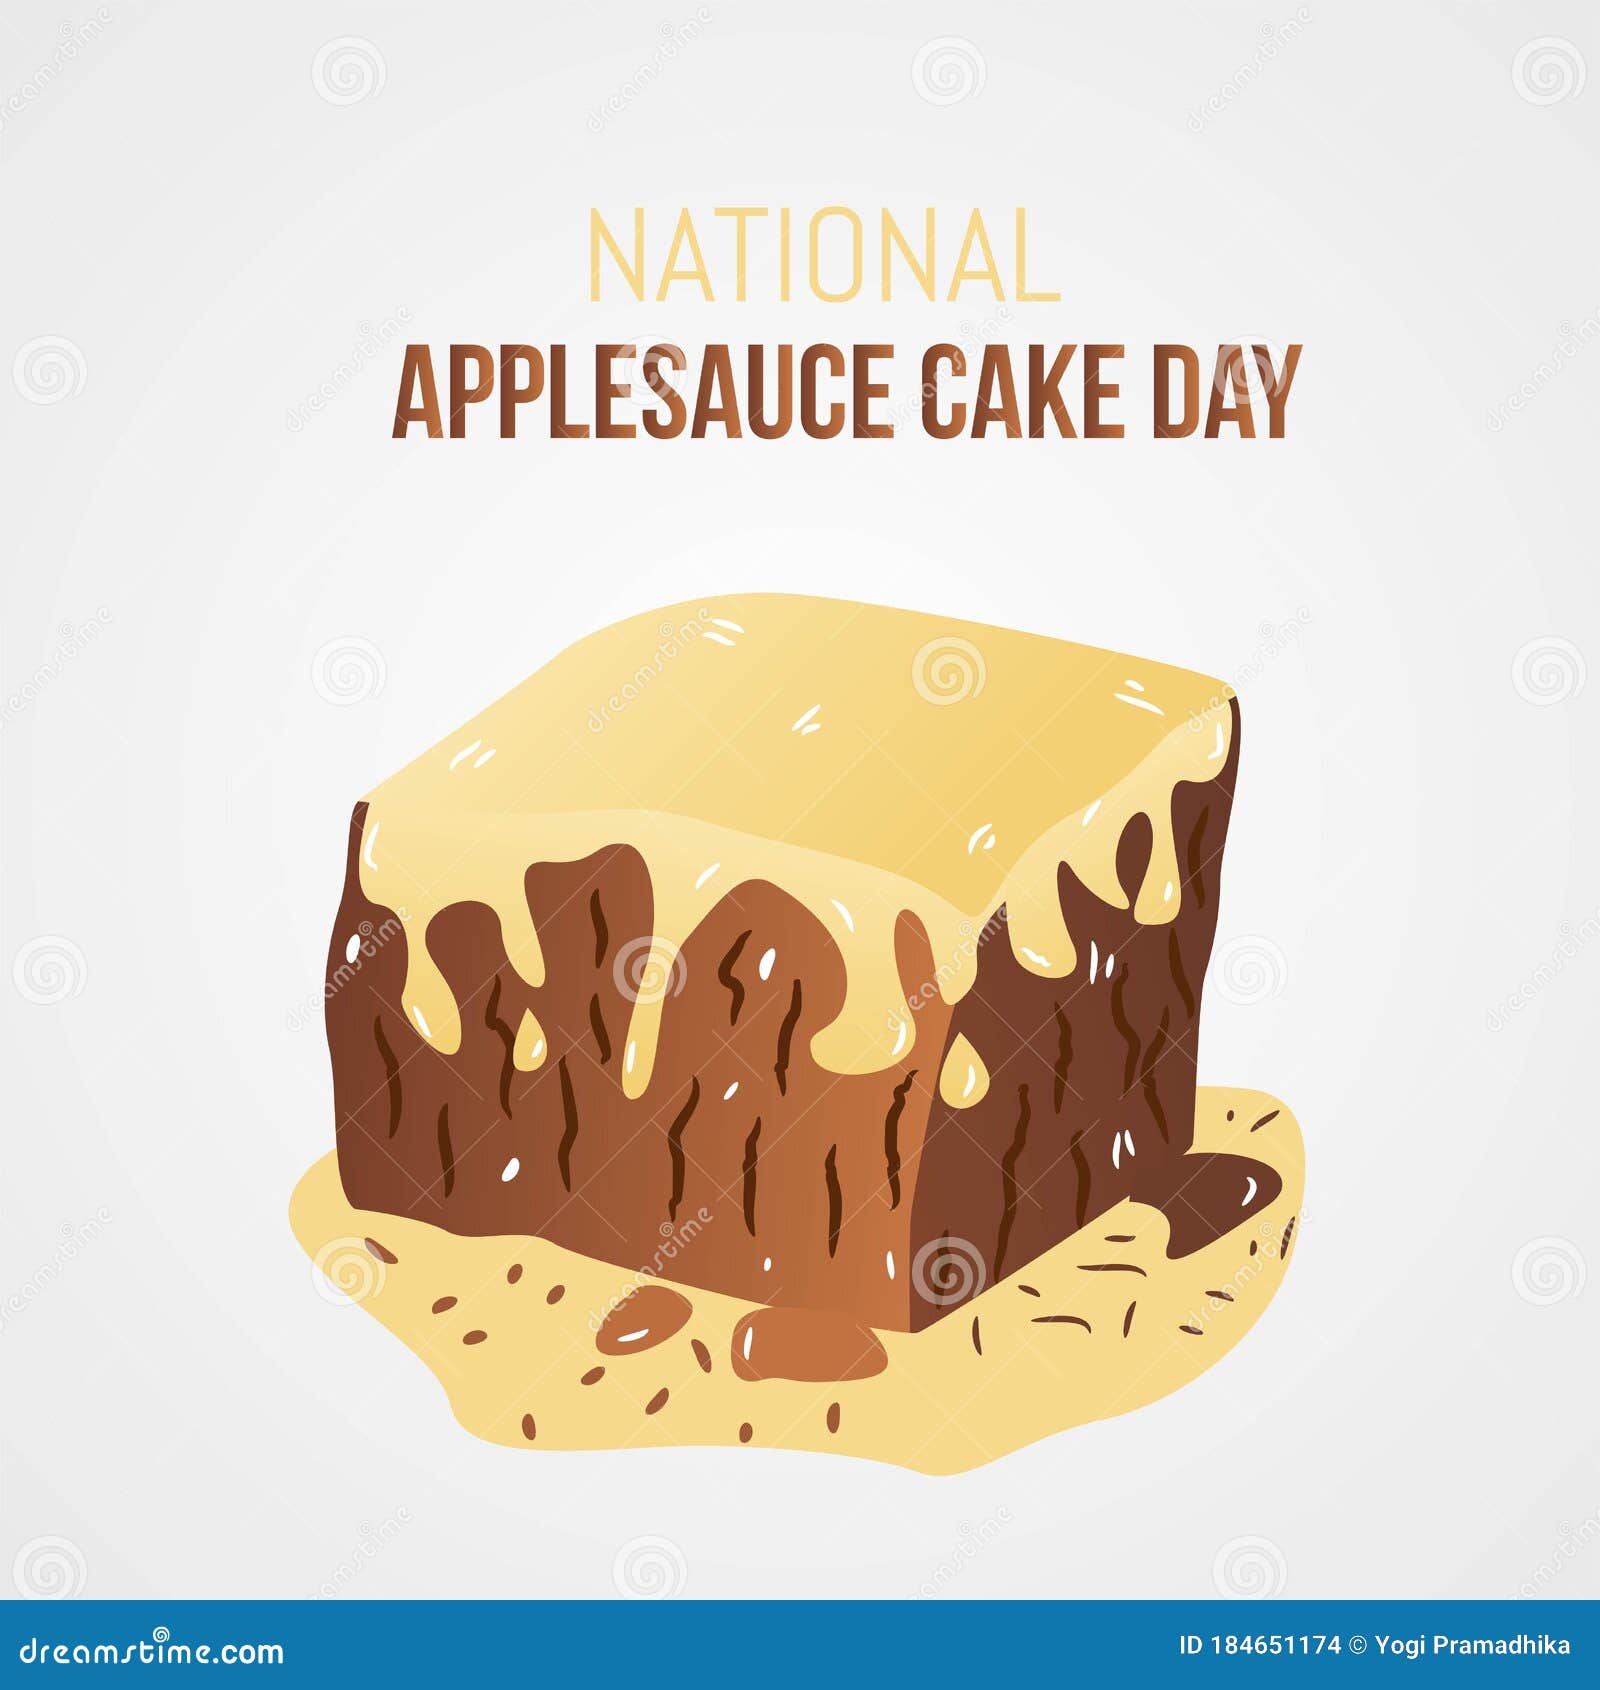 Applesauce Cake - CakeCentral.com